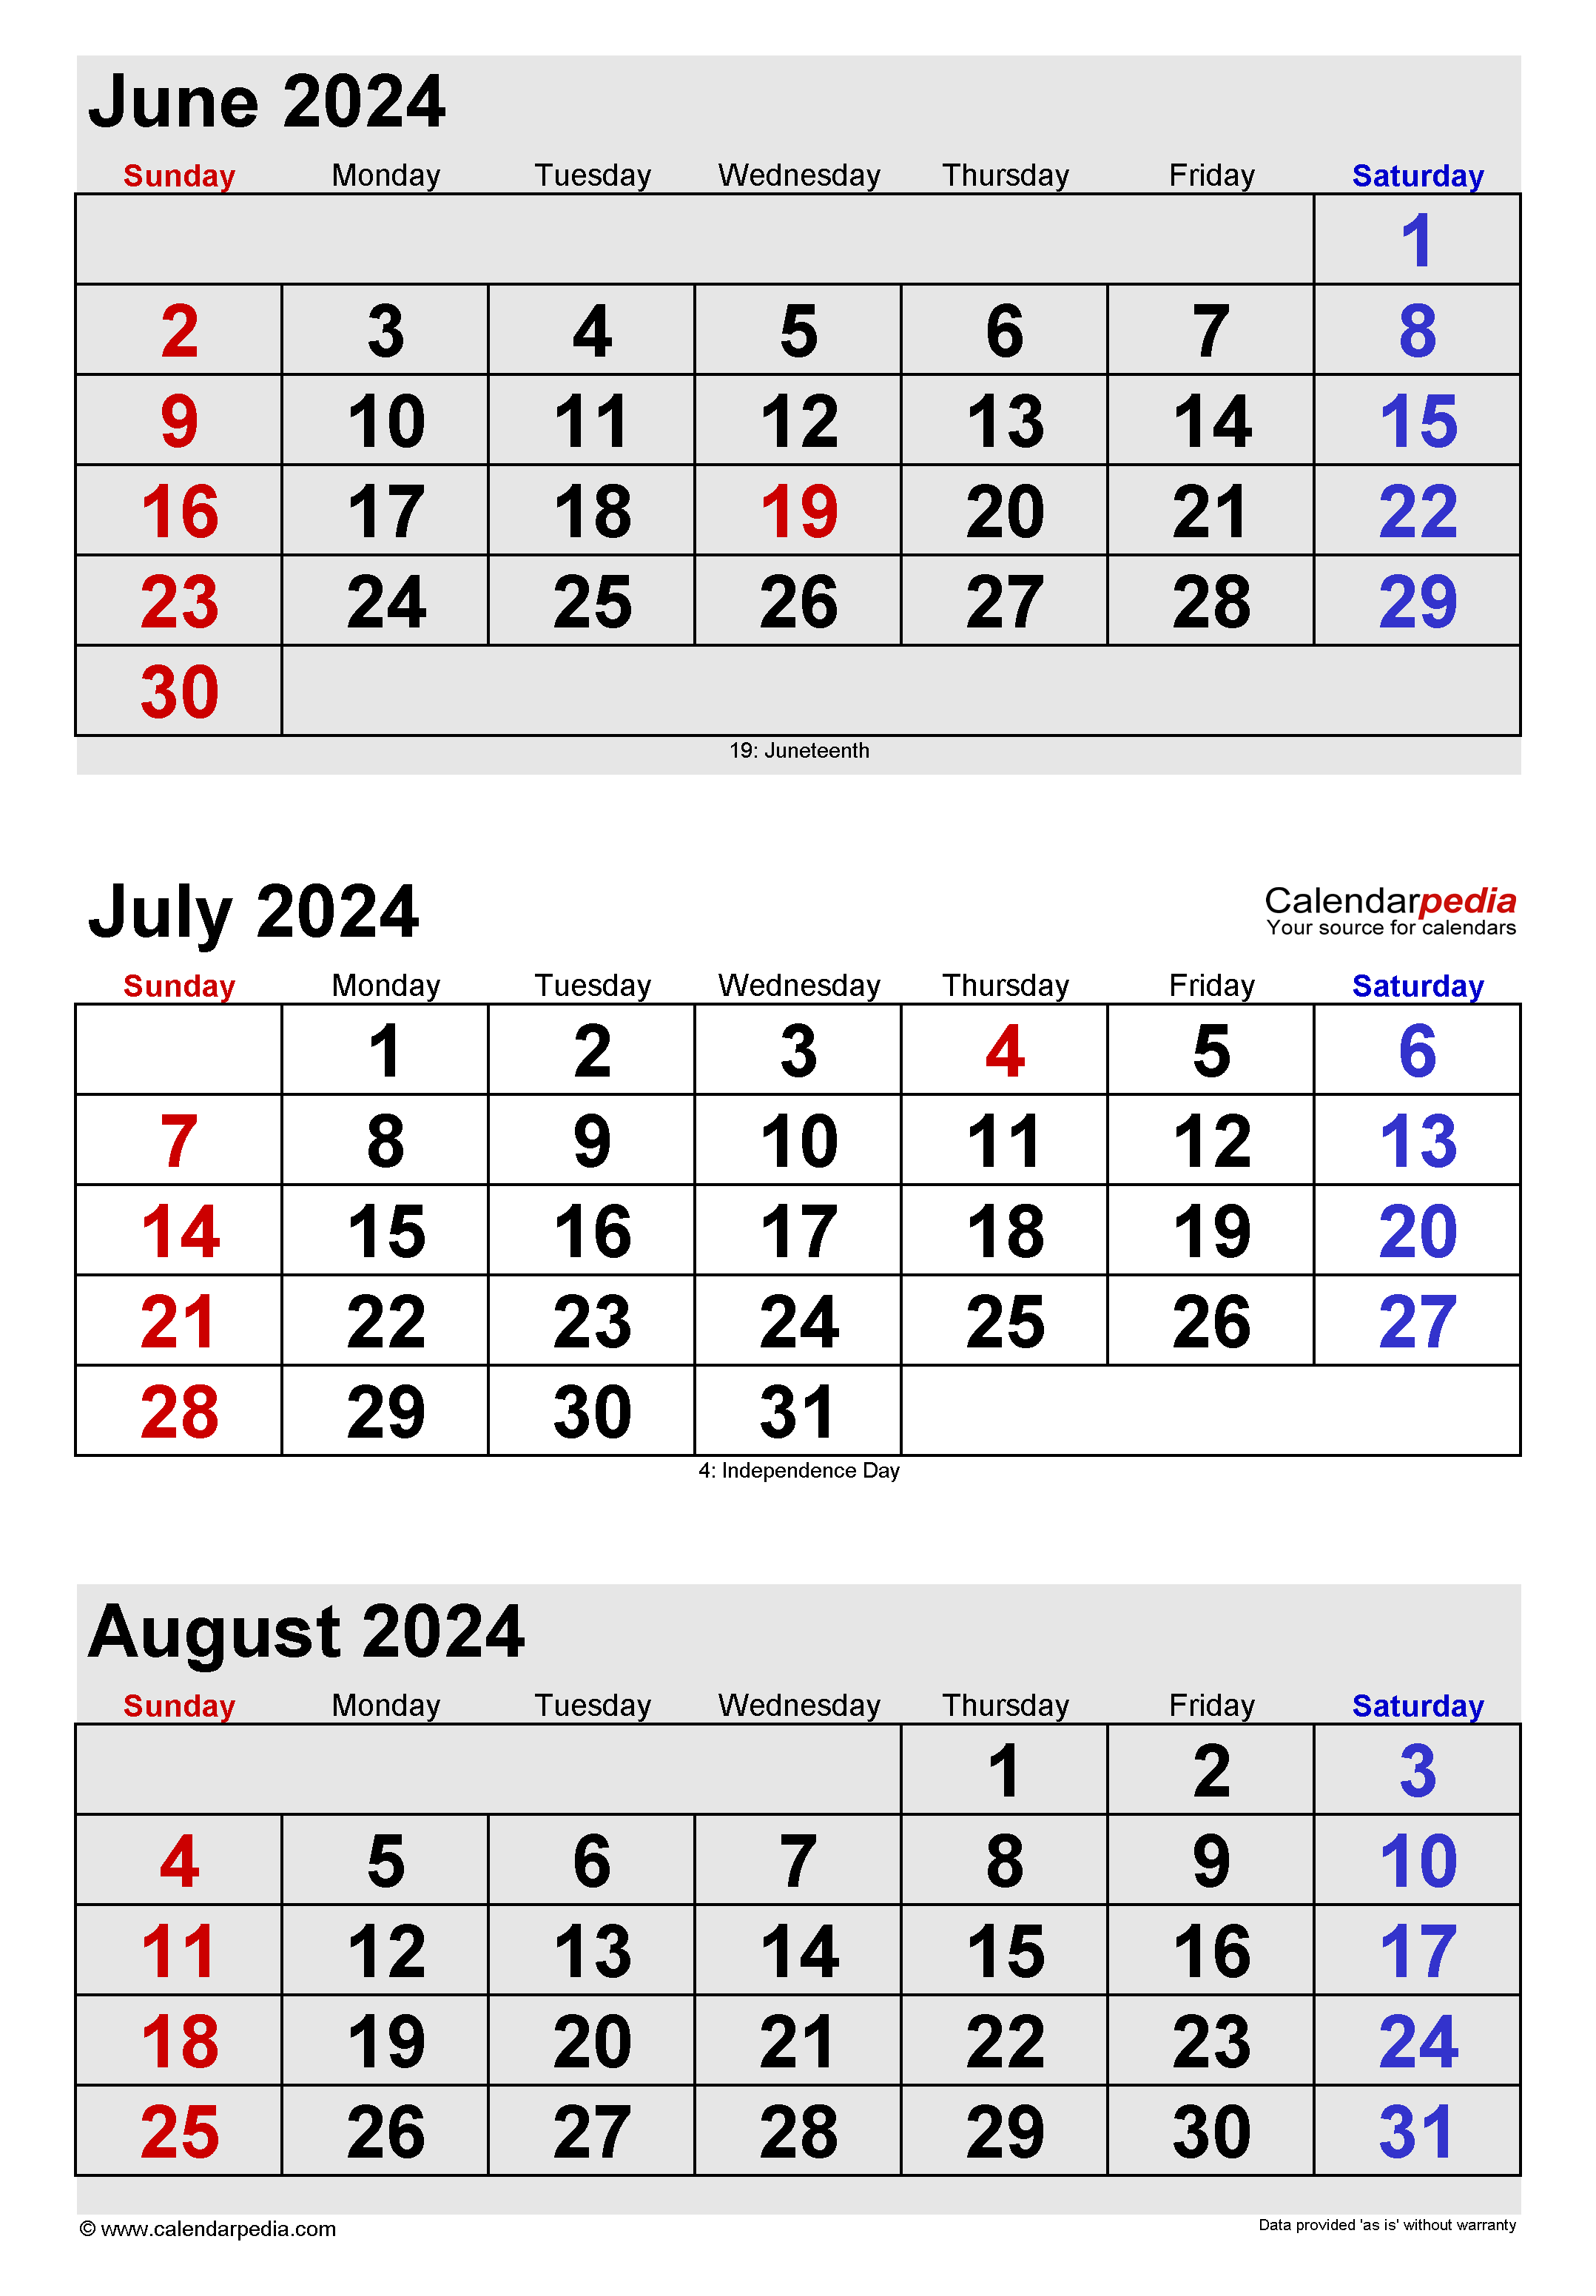 August 2024 July 2024 Calendar Printable 2024 CALENDAR PRINTABLE | Free Printable 3 Month Calendar 2024 June July August